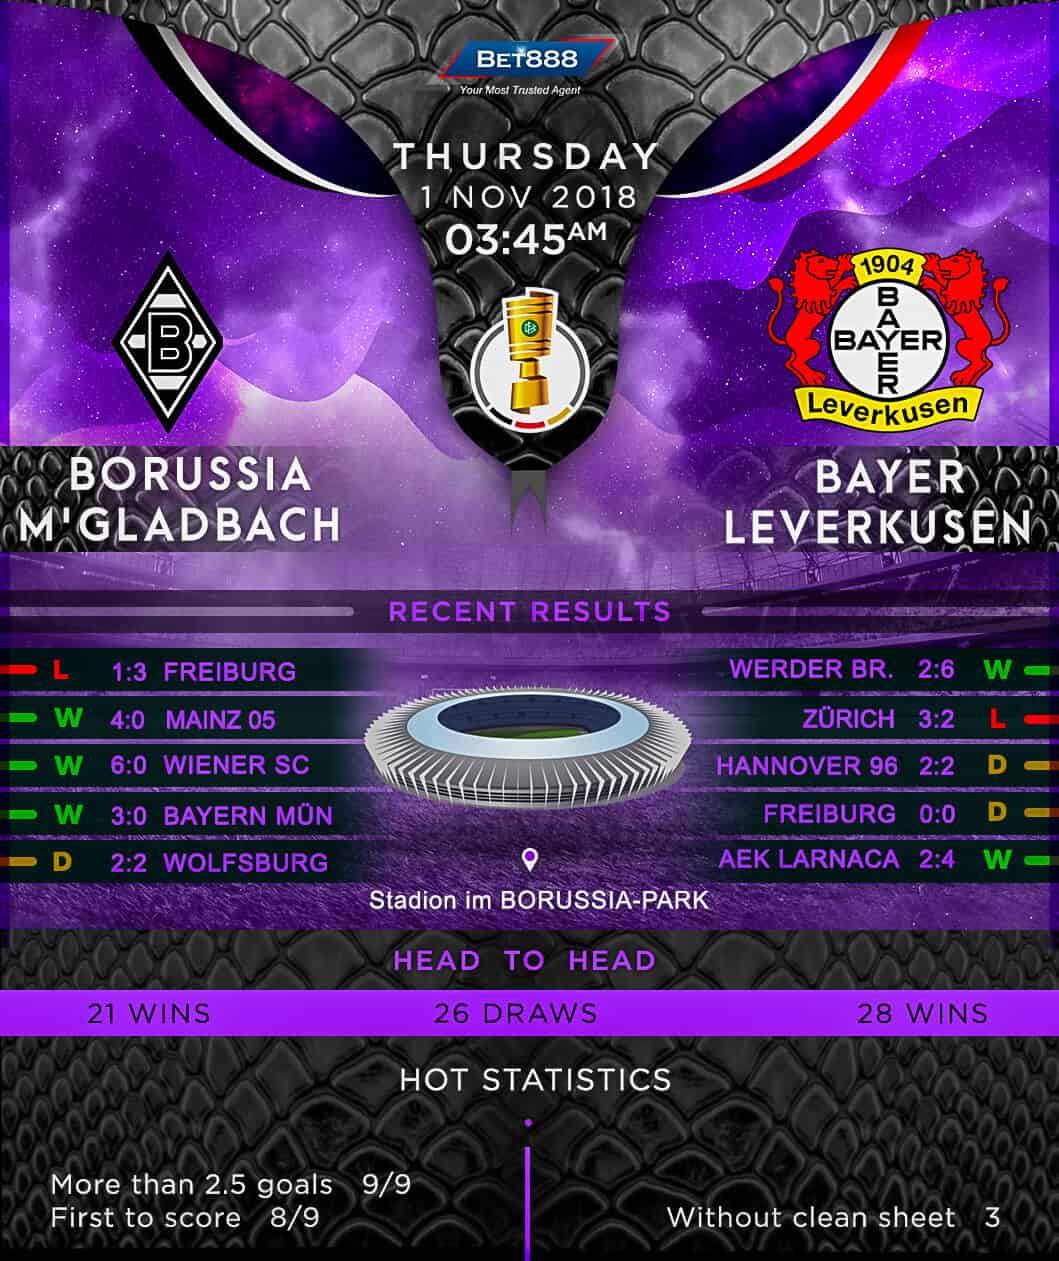 Borussia Monchengladbach vs Bayern Leverkusen 01/11/18